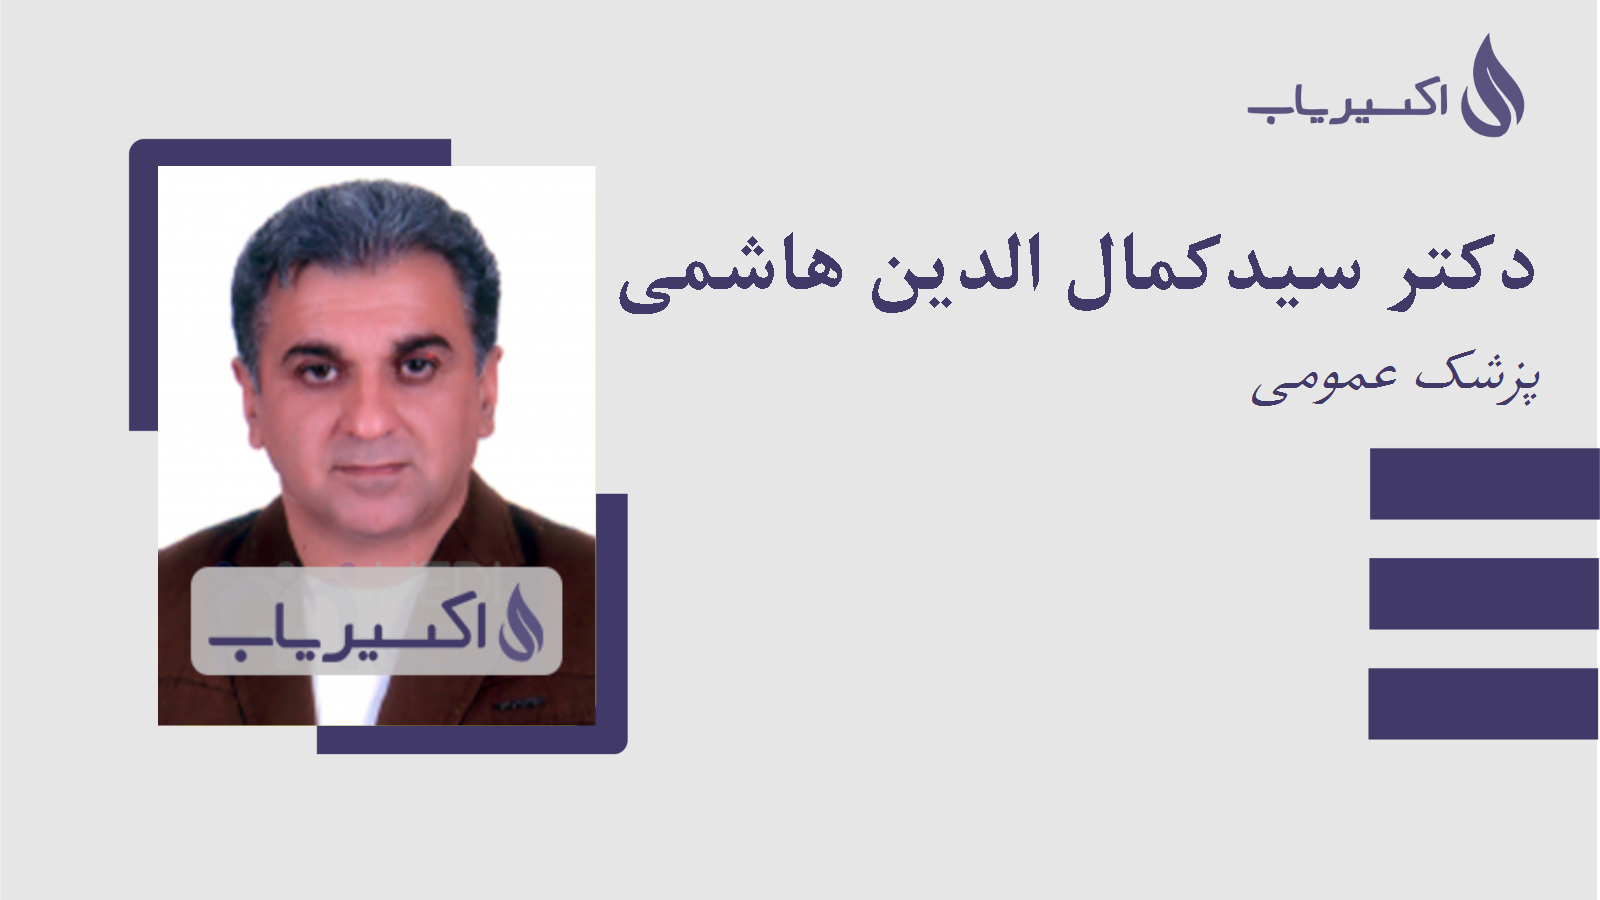 مطب دکتر سیدکمال الدین هاشمی قادی